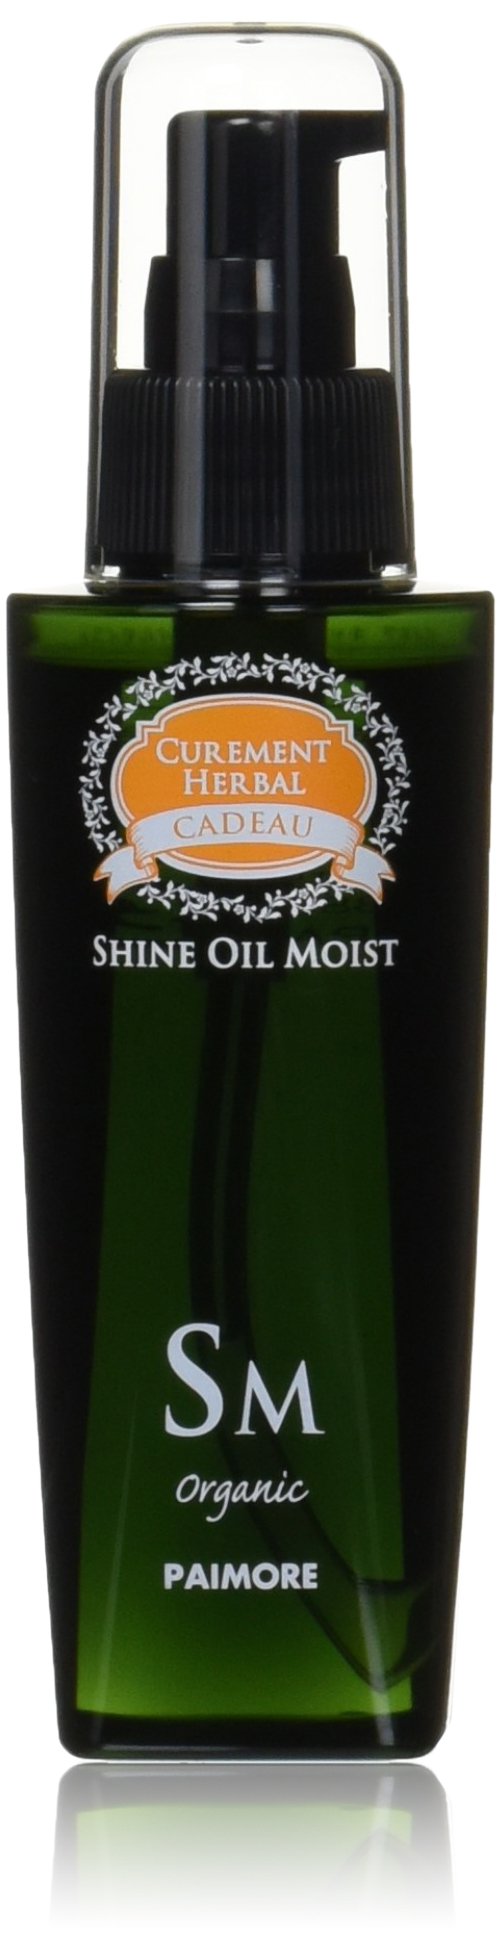 Paimore Cado Shine Oil Moist 120ml